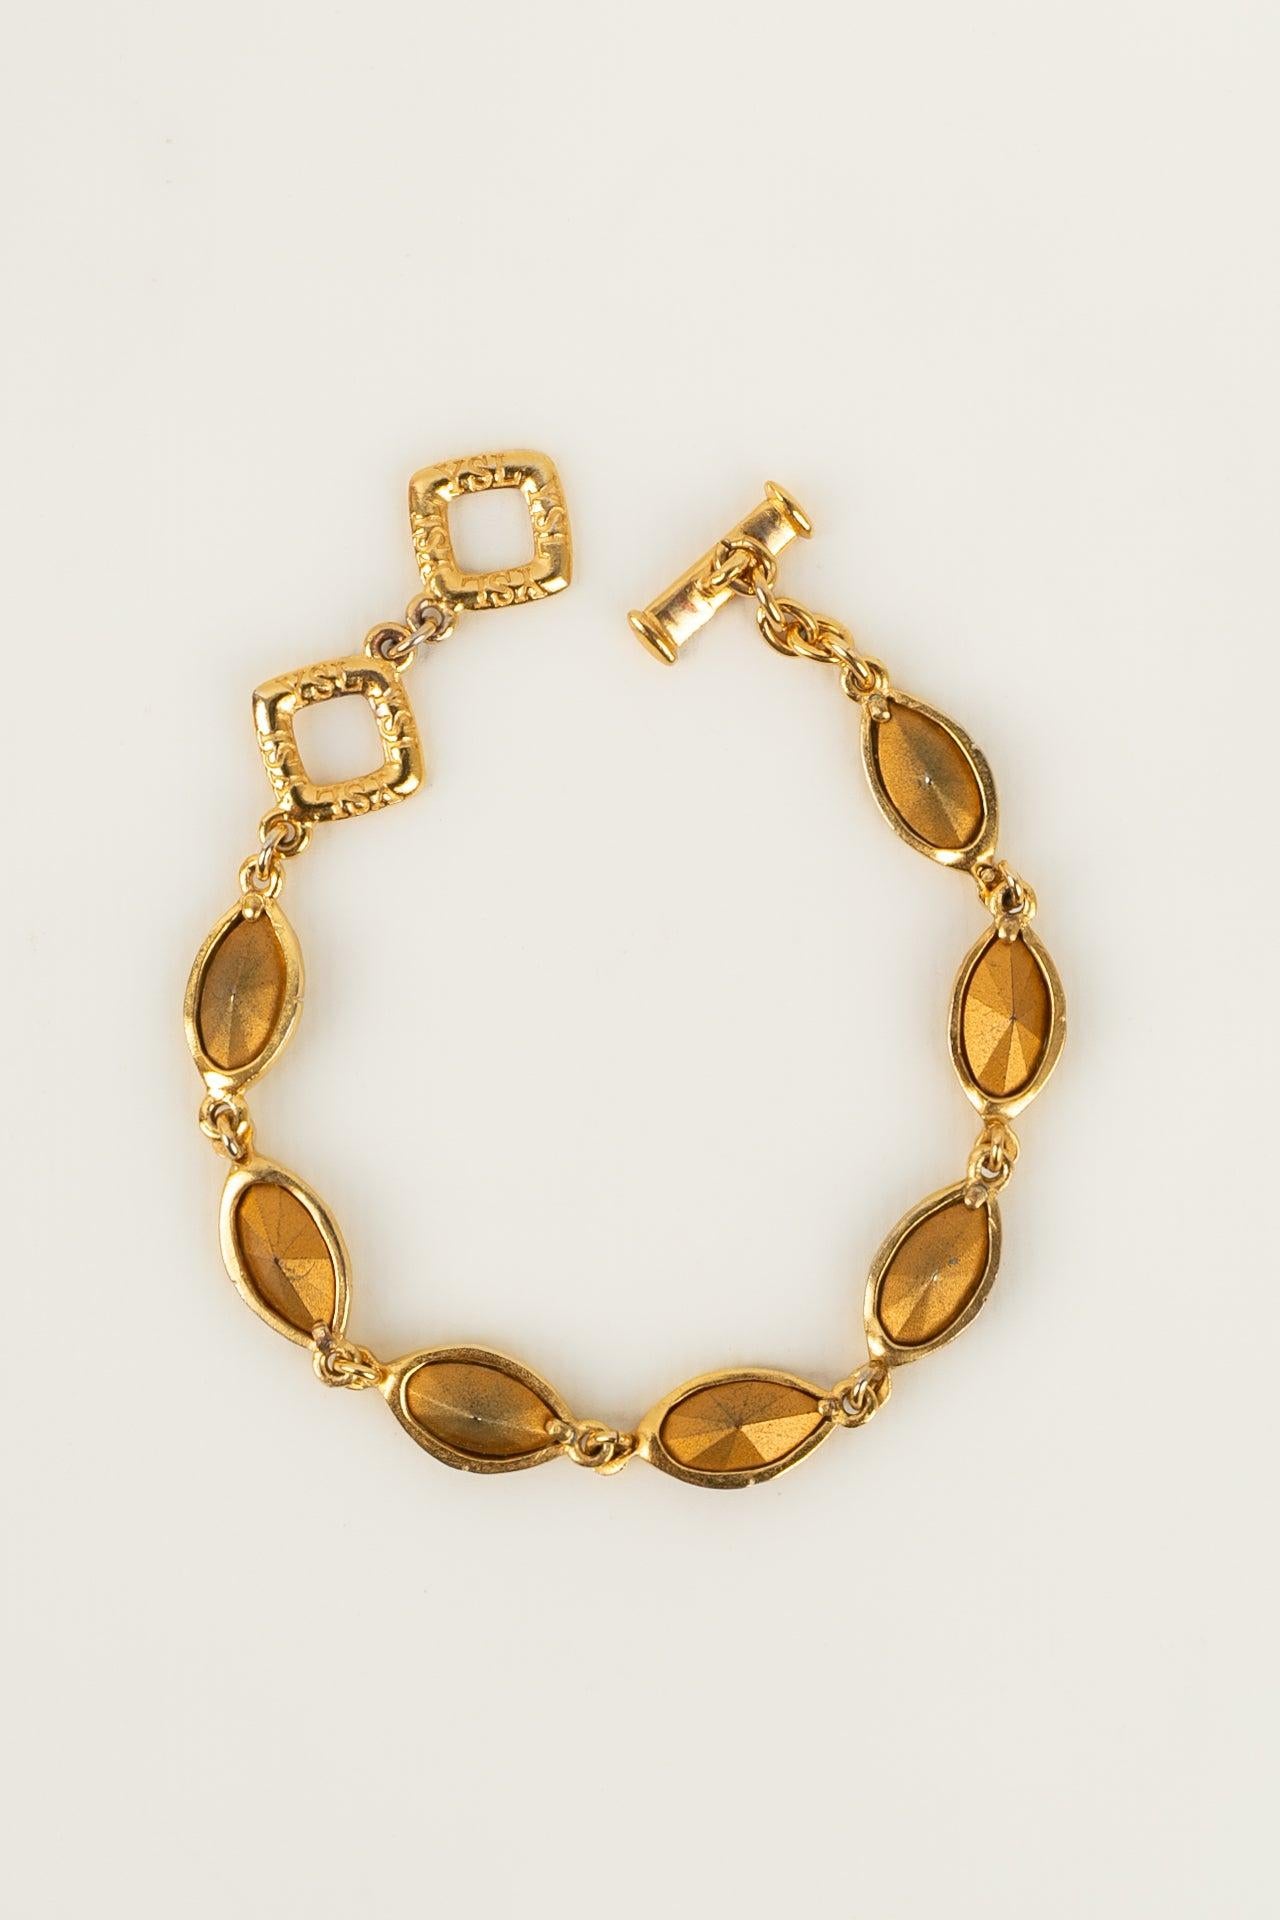 Women's Yves Saint Laurent Bracelet in Gold-Plated Metal and Orange Rhinestones For Sale